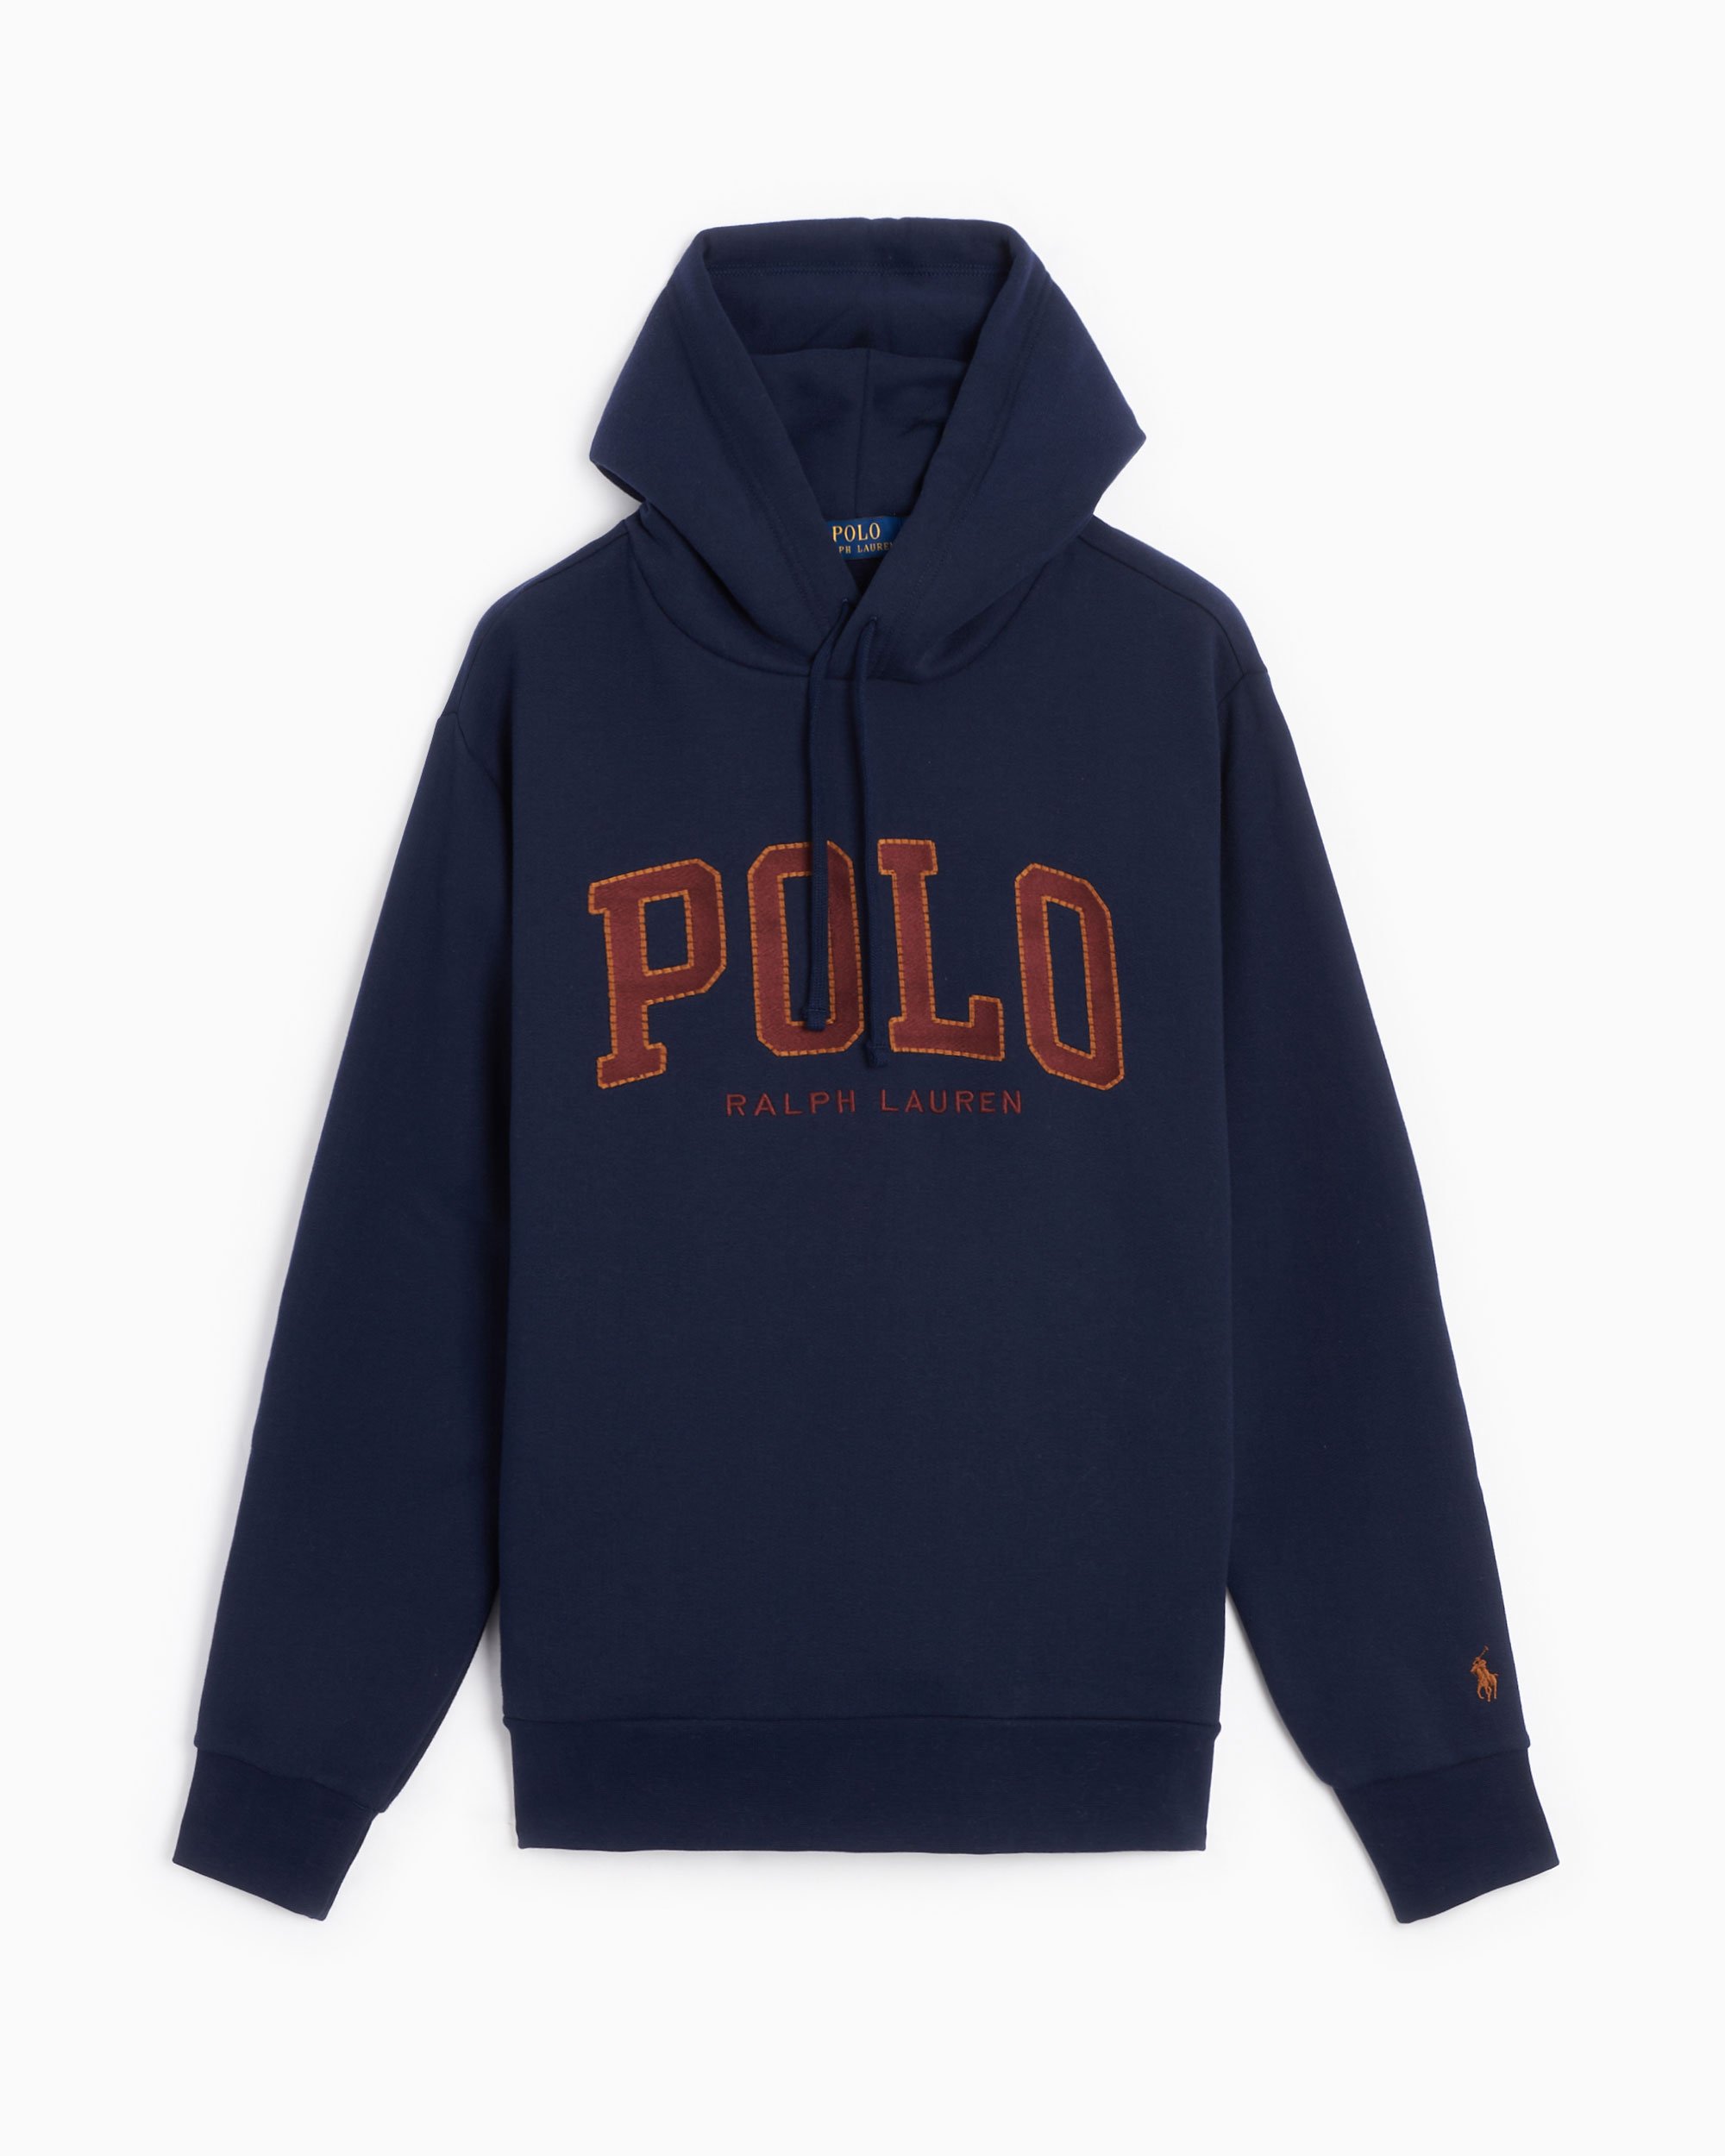 90s Polo Ralph Lauren Hooded Jacket - Men's Large, Women's XL